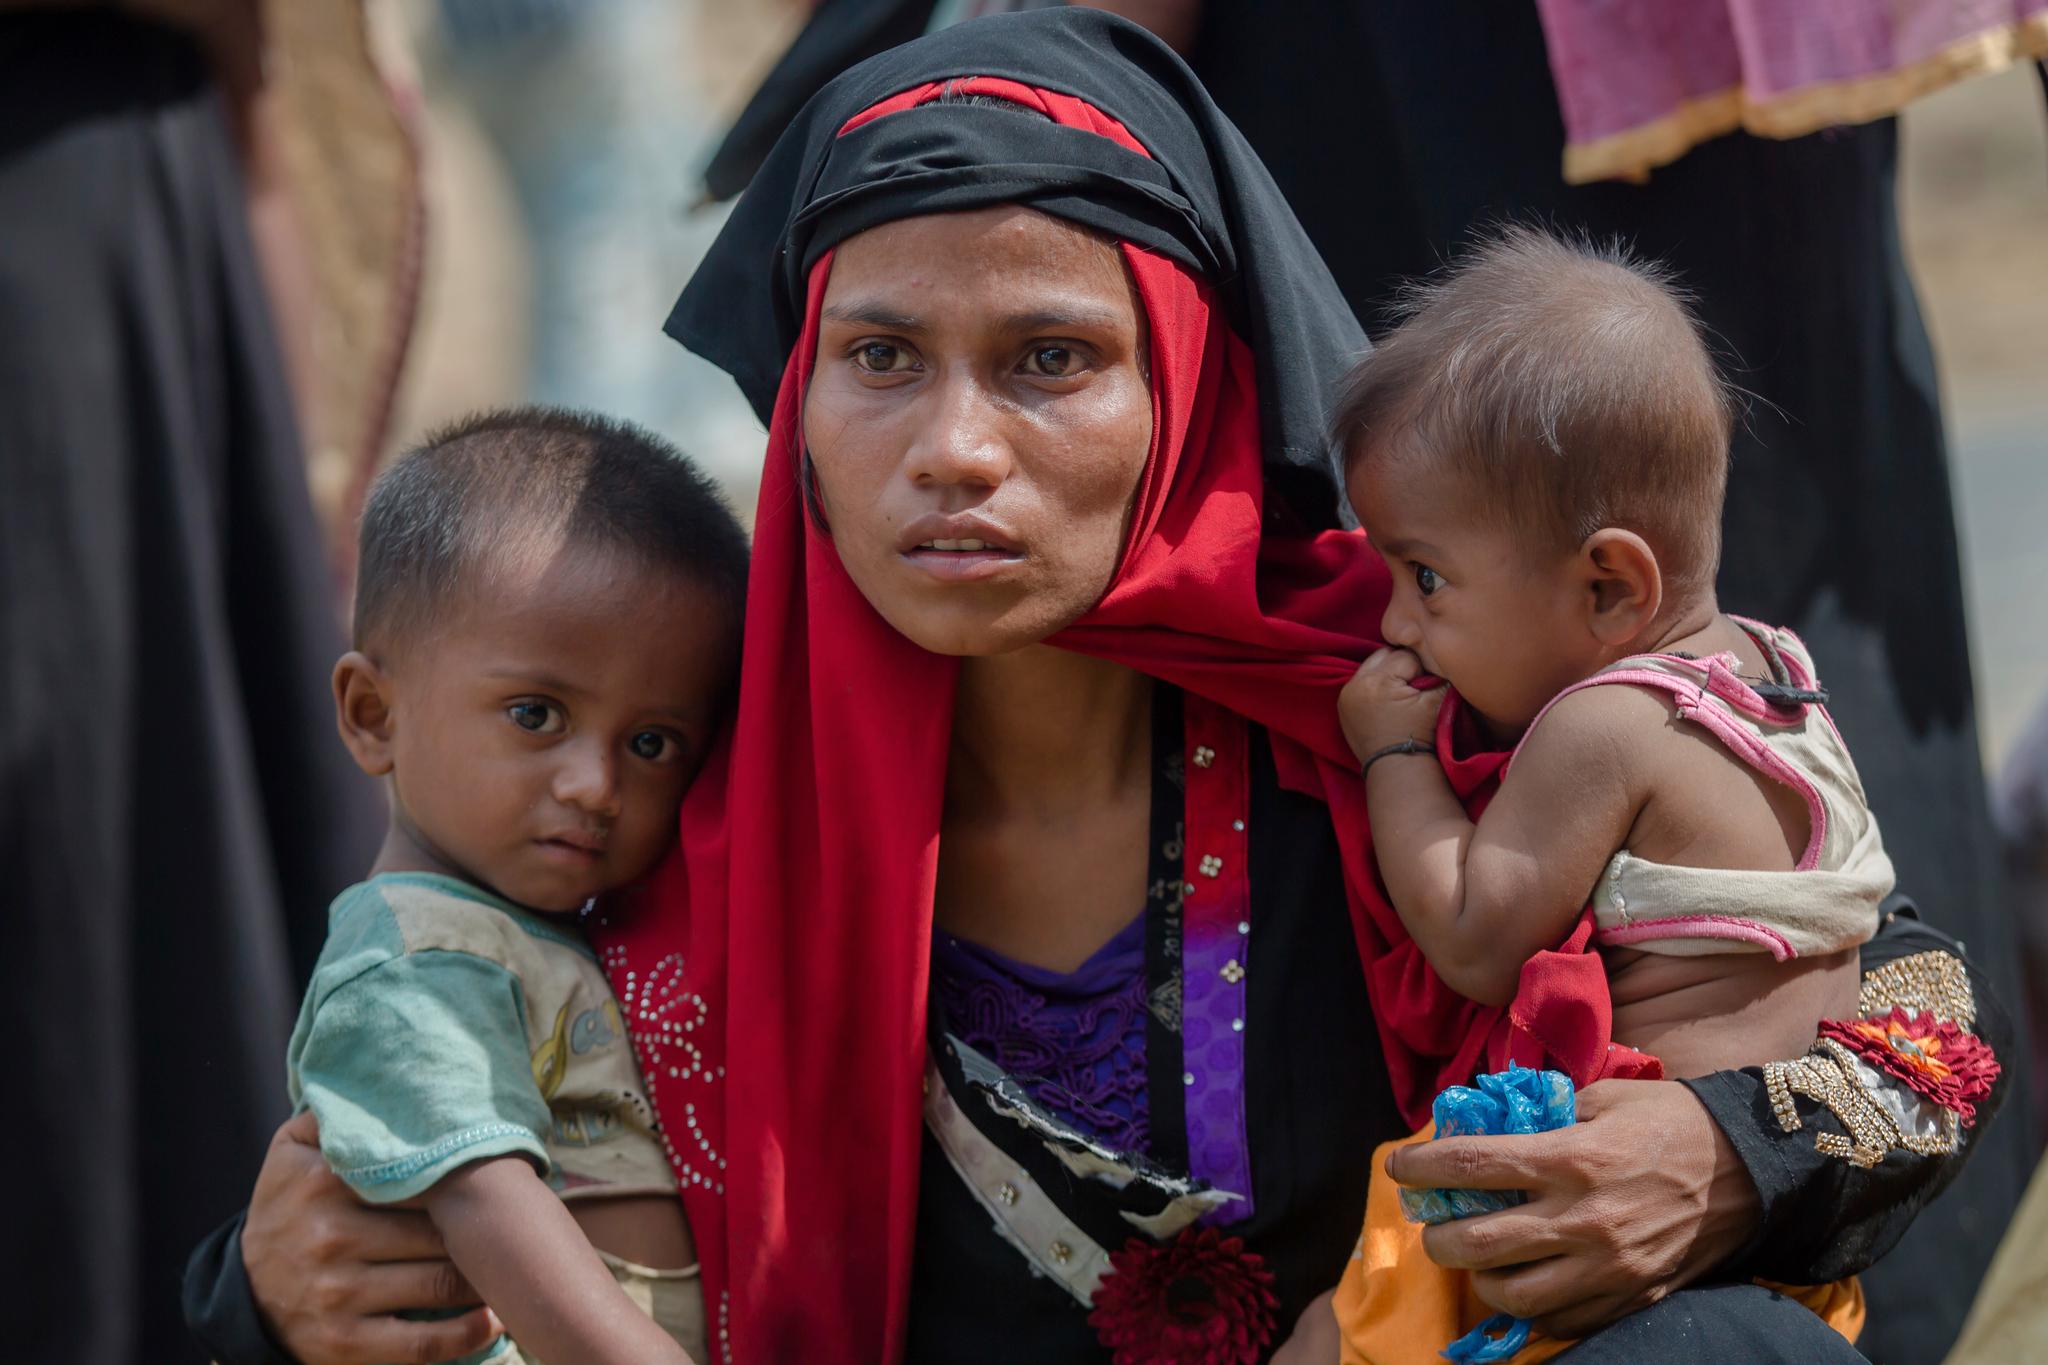  Rukaya Begum kom med to barn til en flyktningleir i fjor høst.